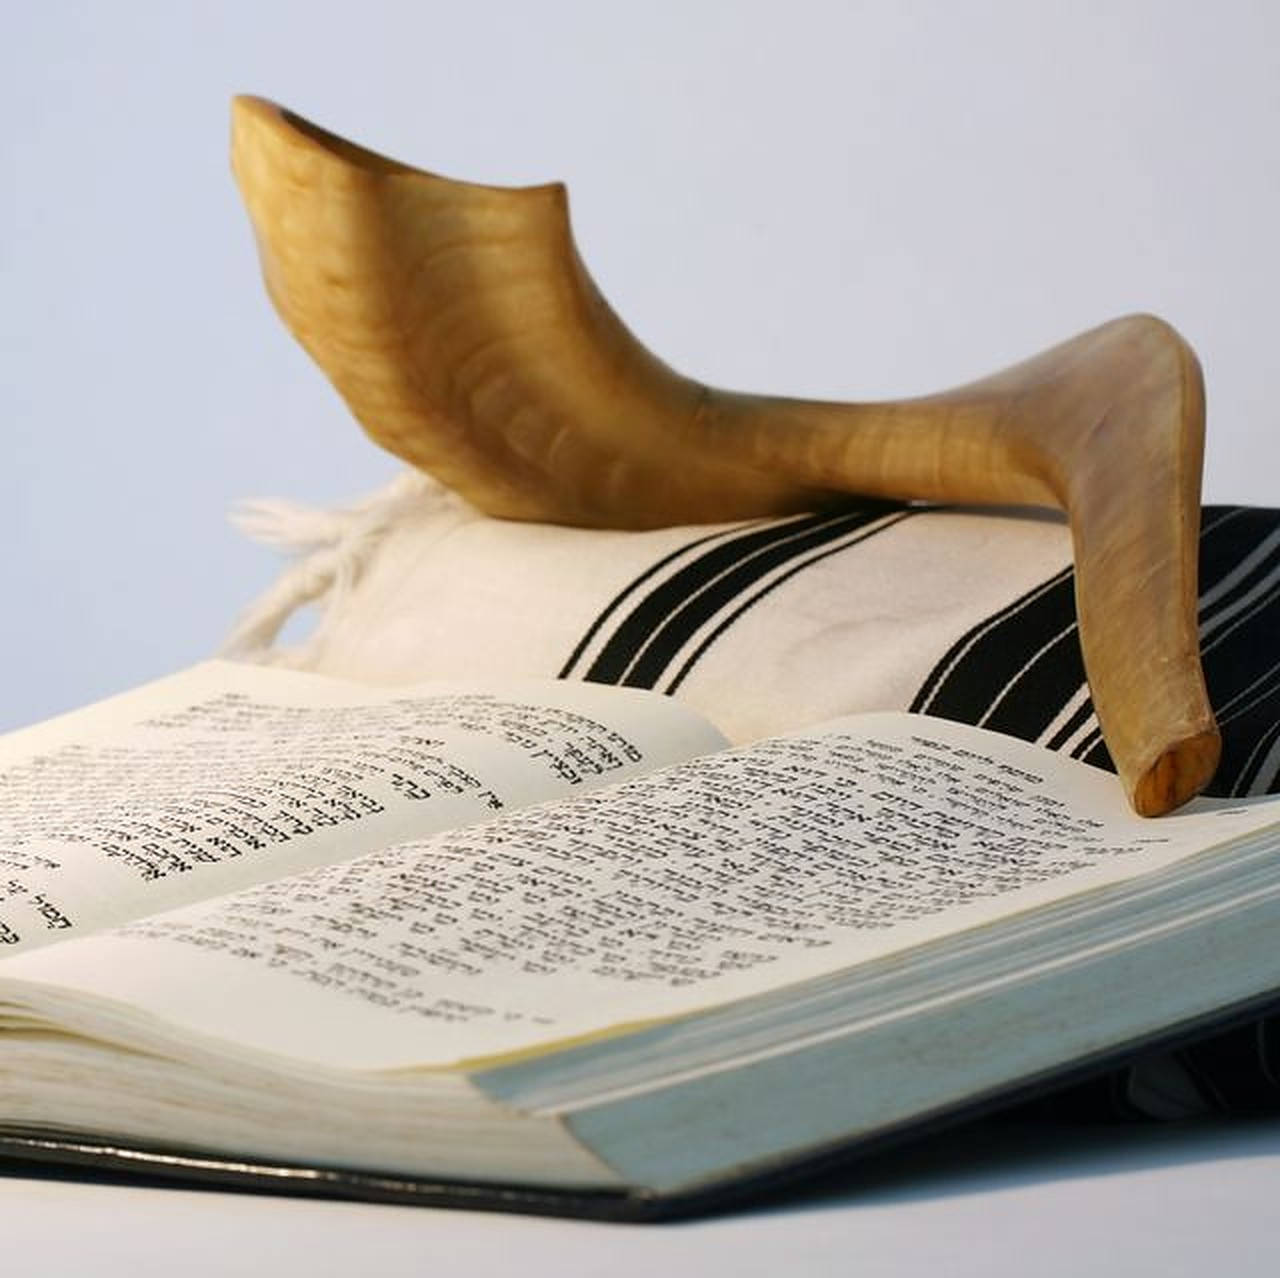 Yom Kippur Horn And Book